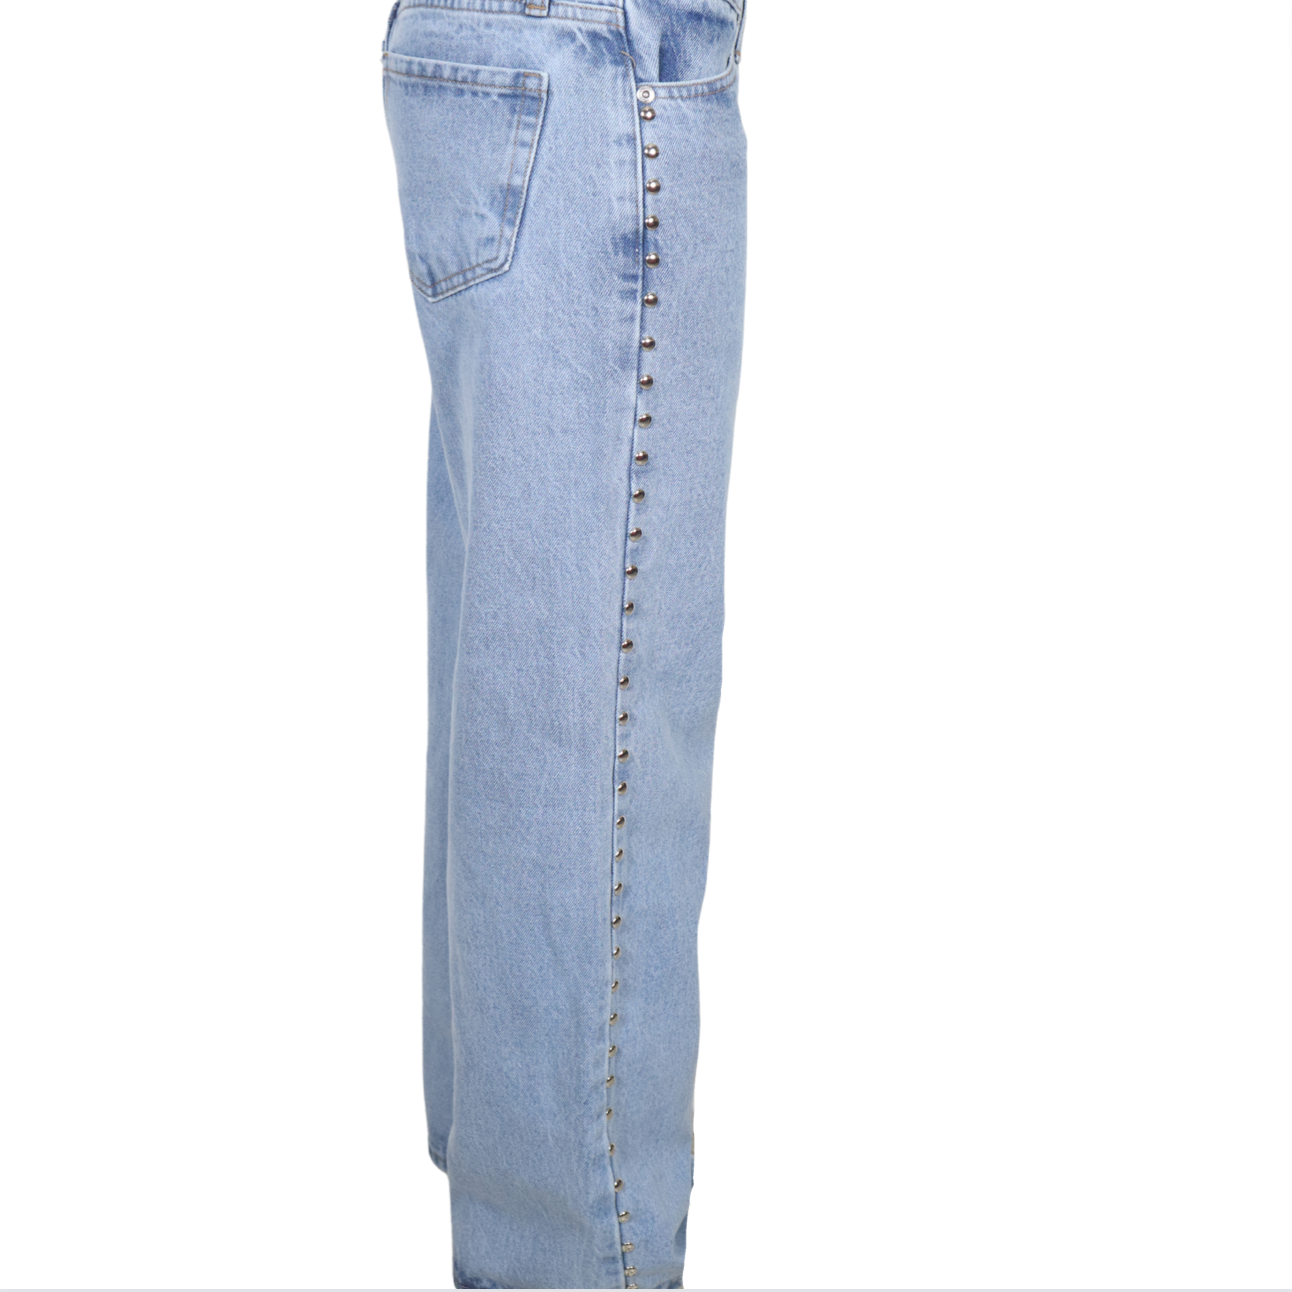 Safari jeans (RESTOCK SOON)